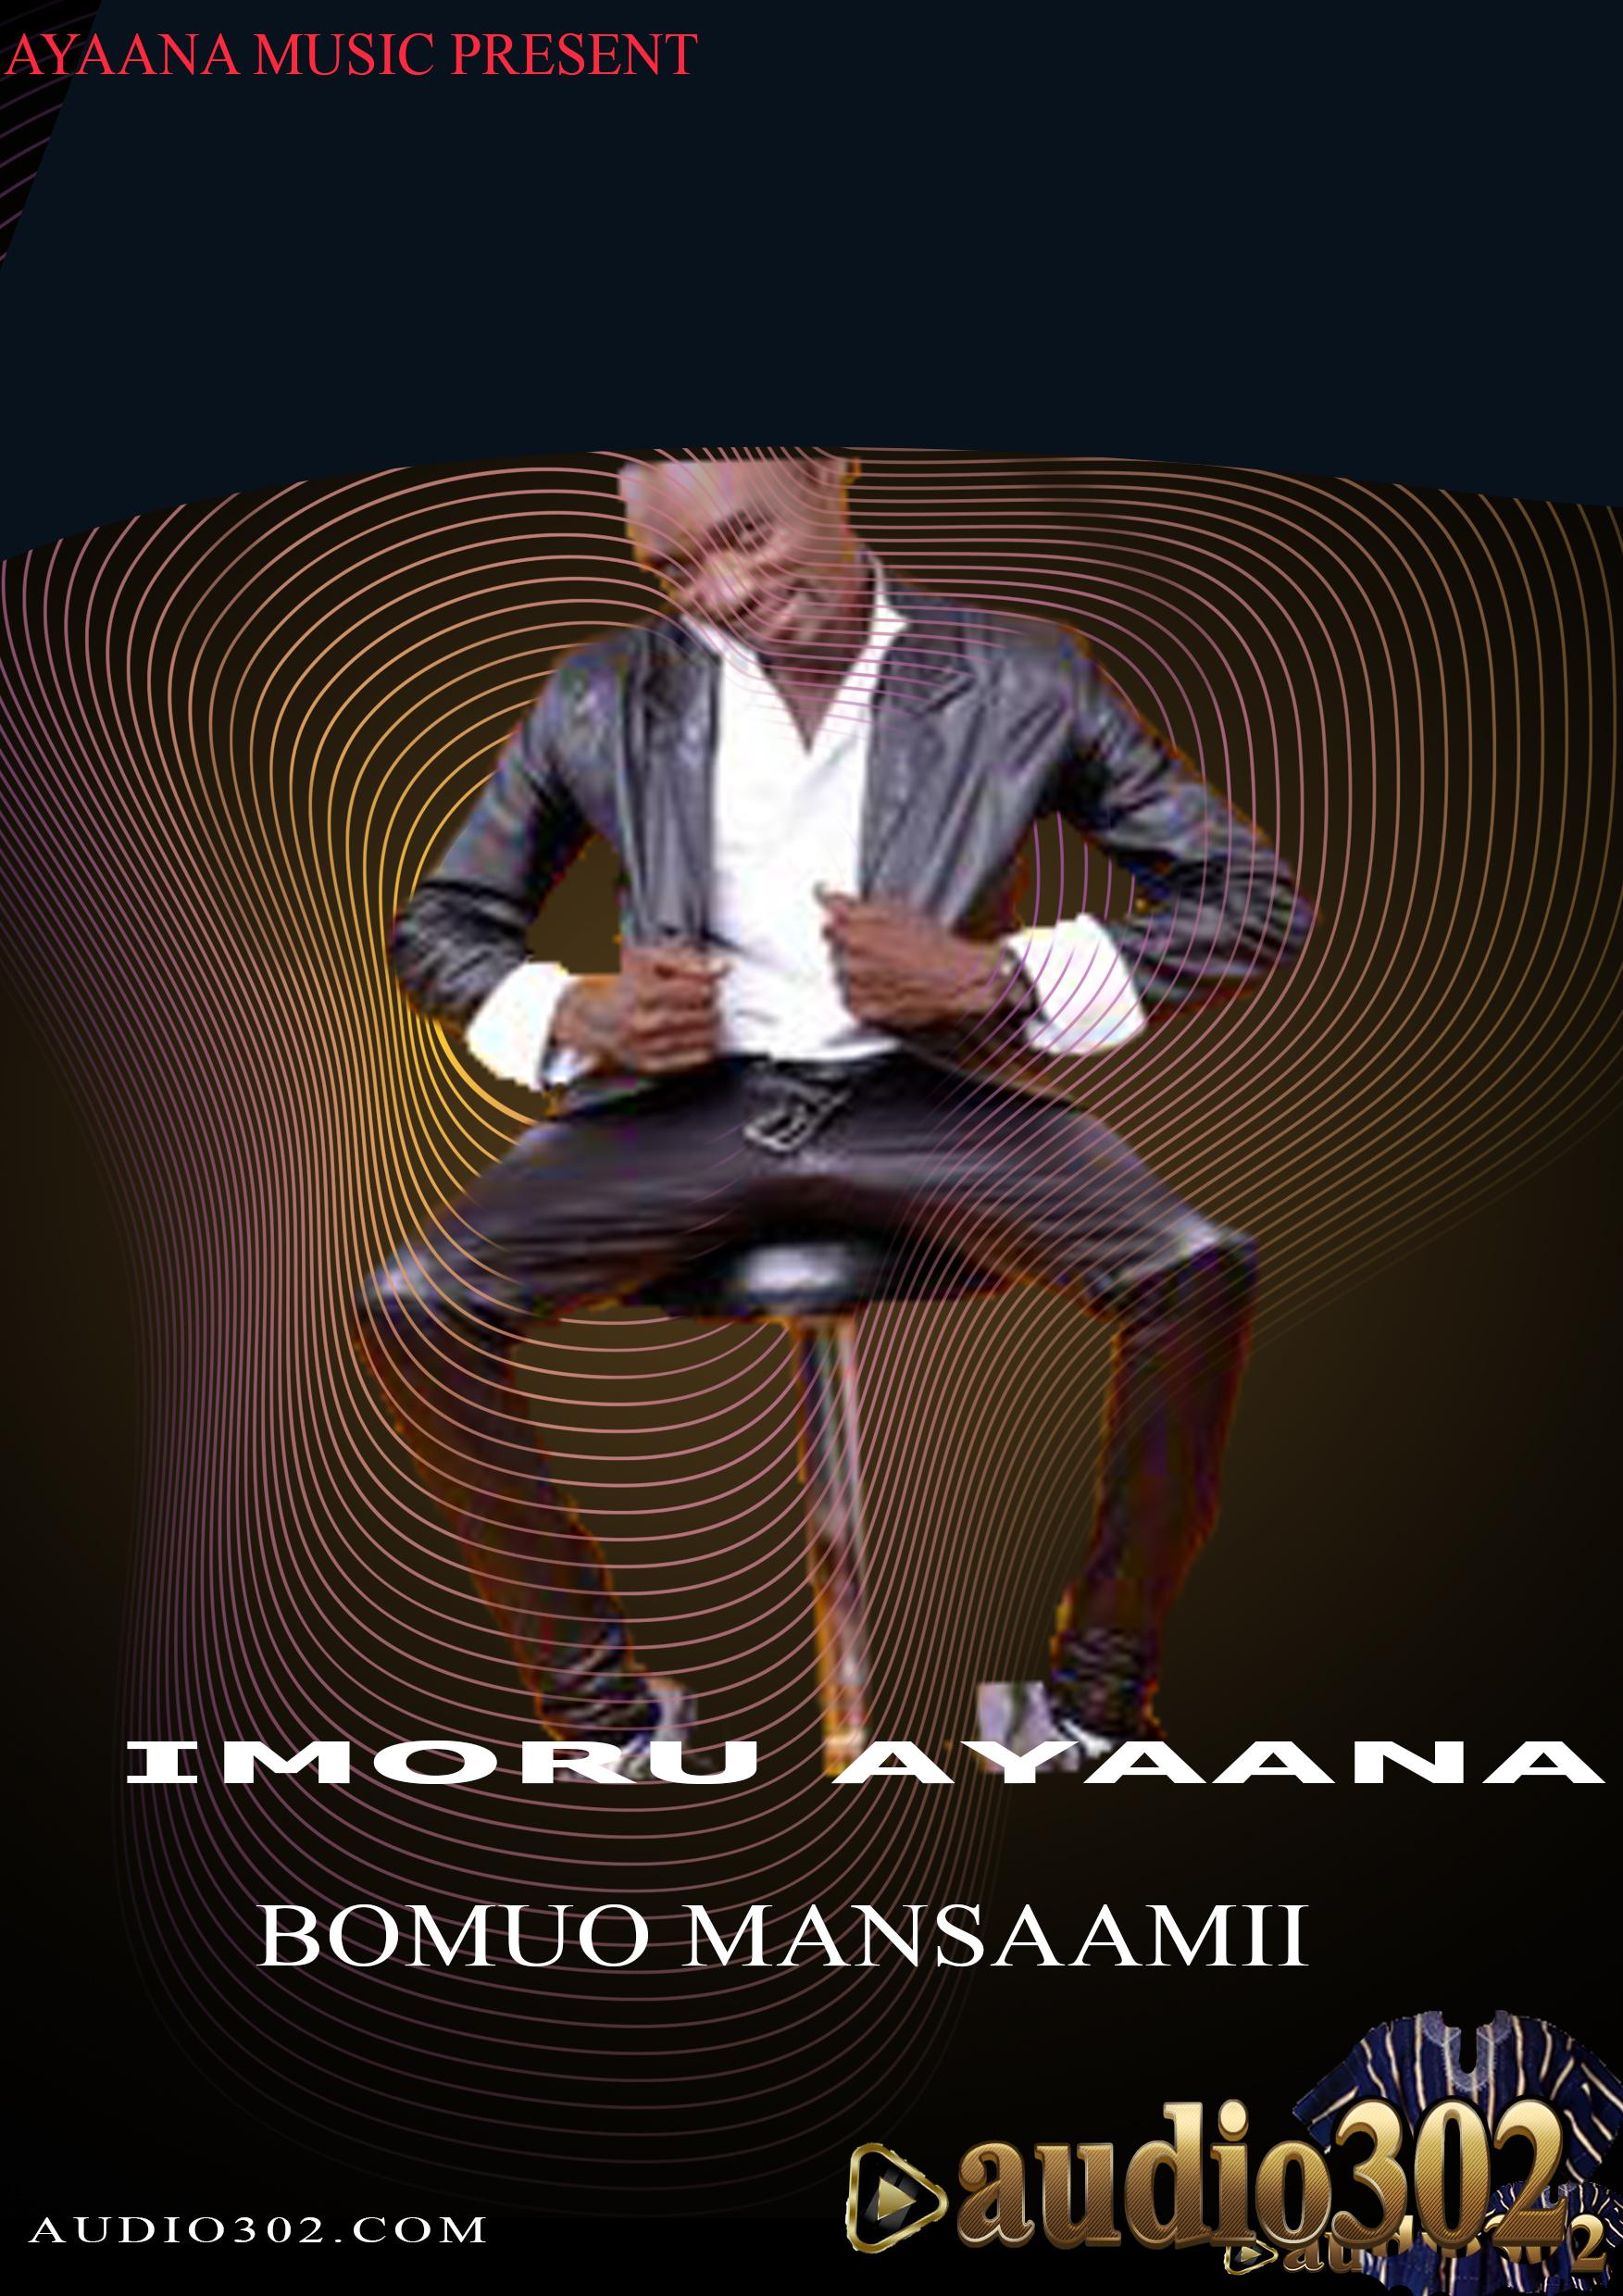 Download Music Mp3 Ayaana Bomuo Mansaamii